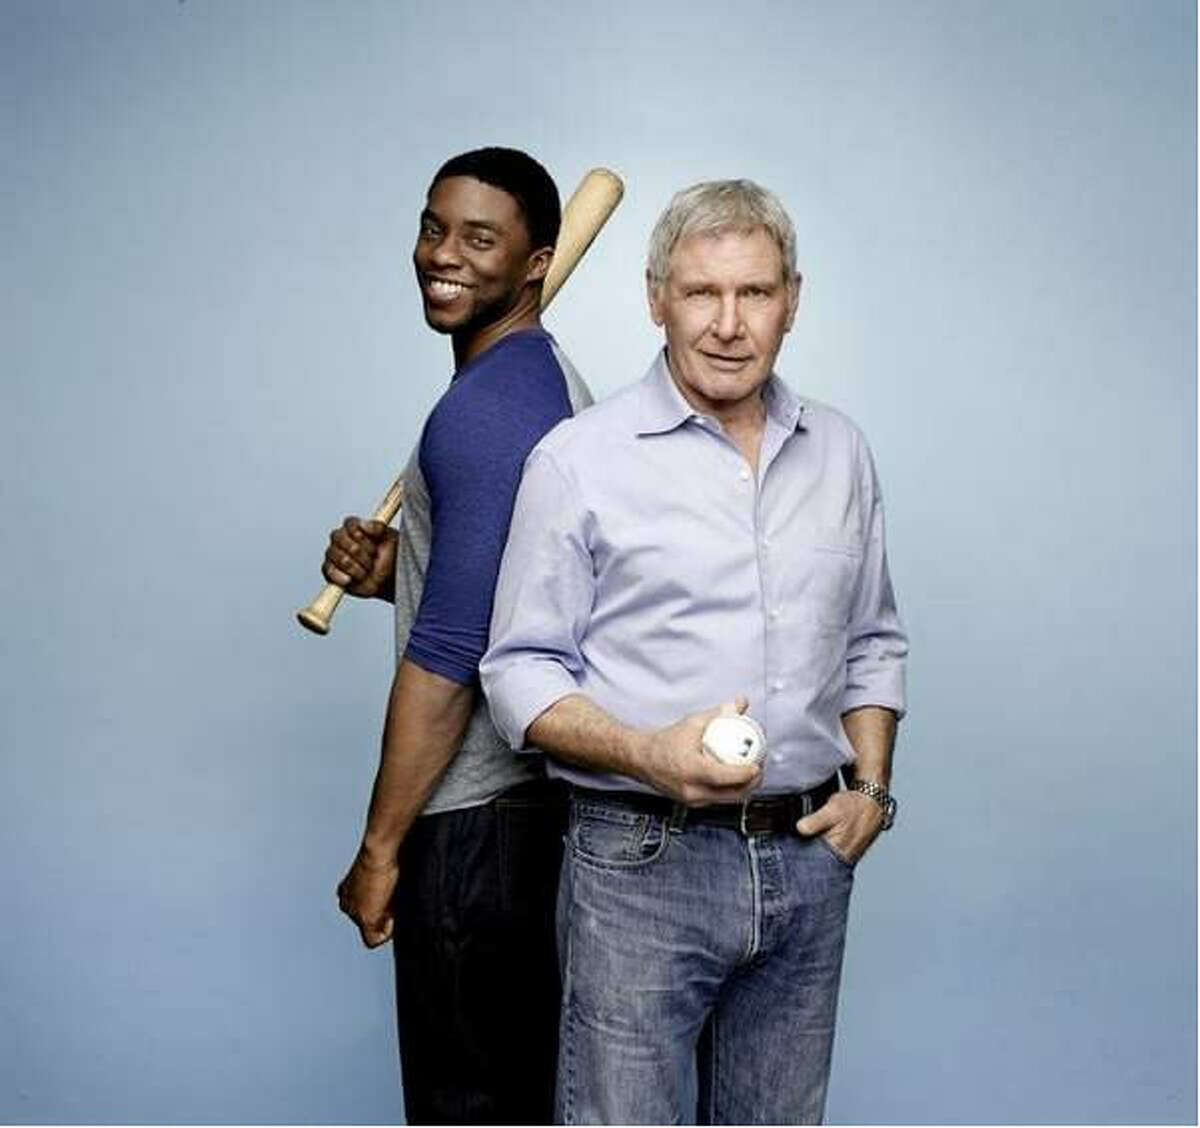 Katastrofe Anden klasse hvede Stars of new Jackie Robinson film talk about baseball, life